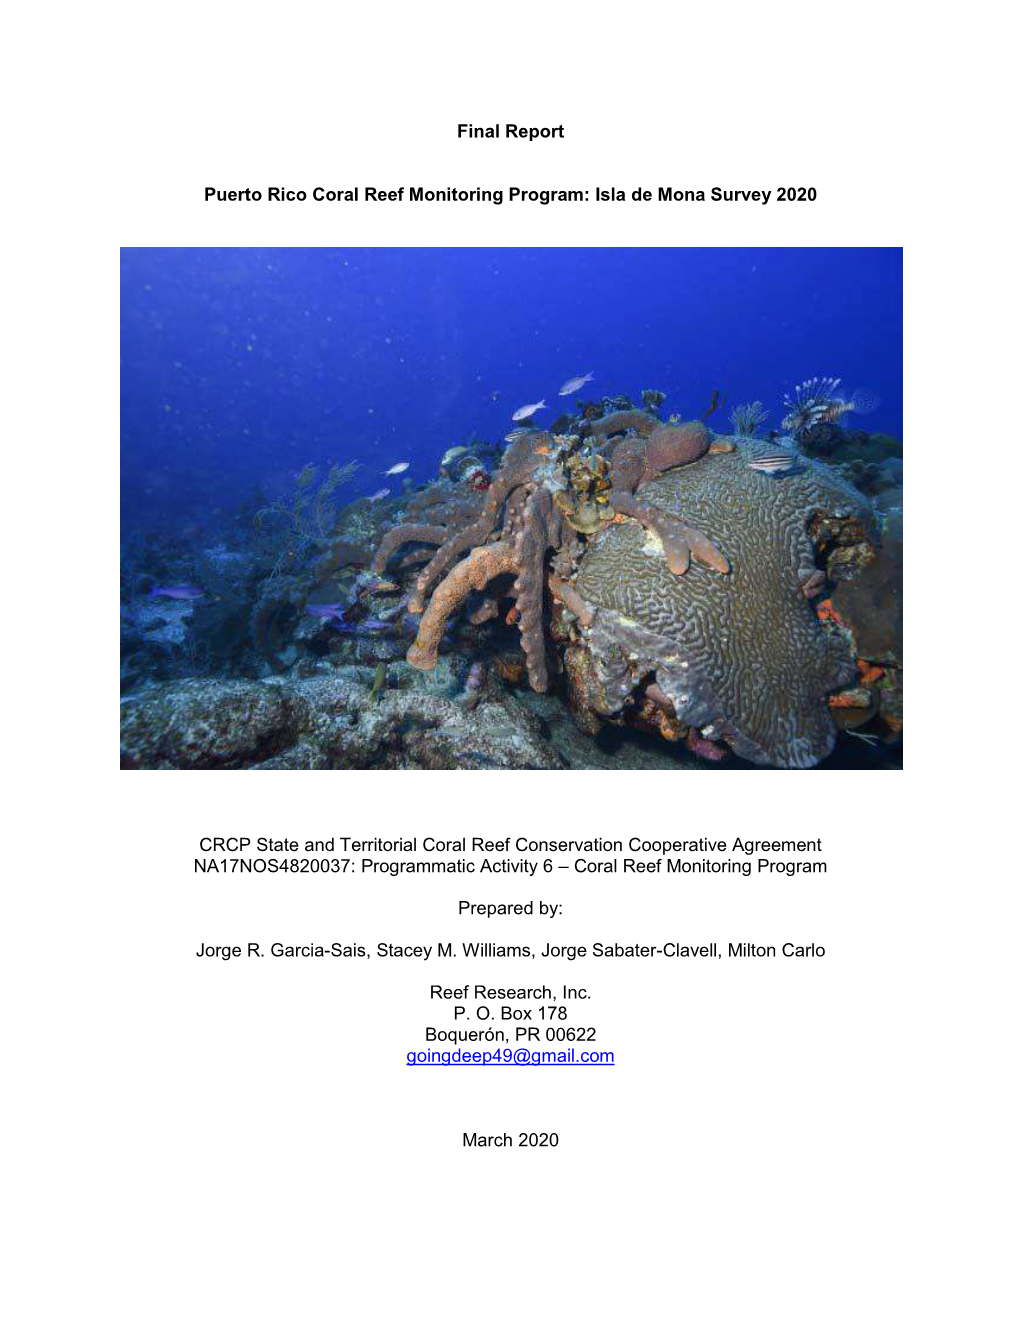 Final Report Puerto Rico Coral Reef Monitoring Program